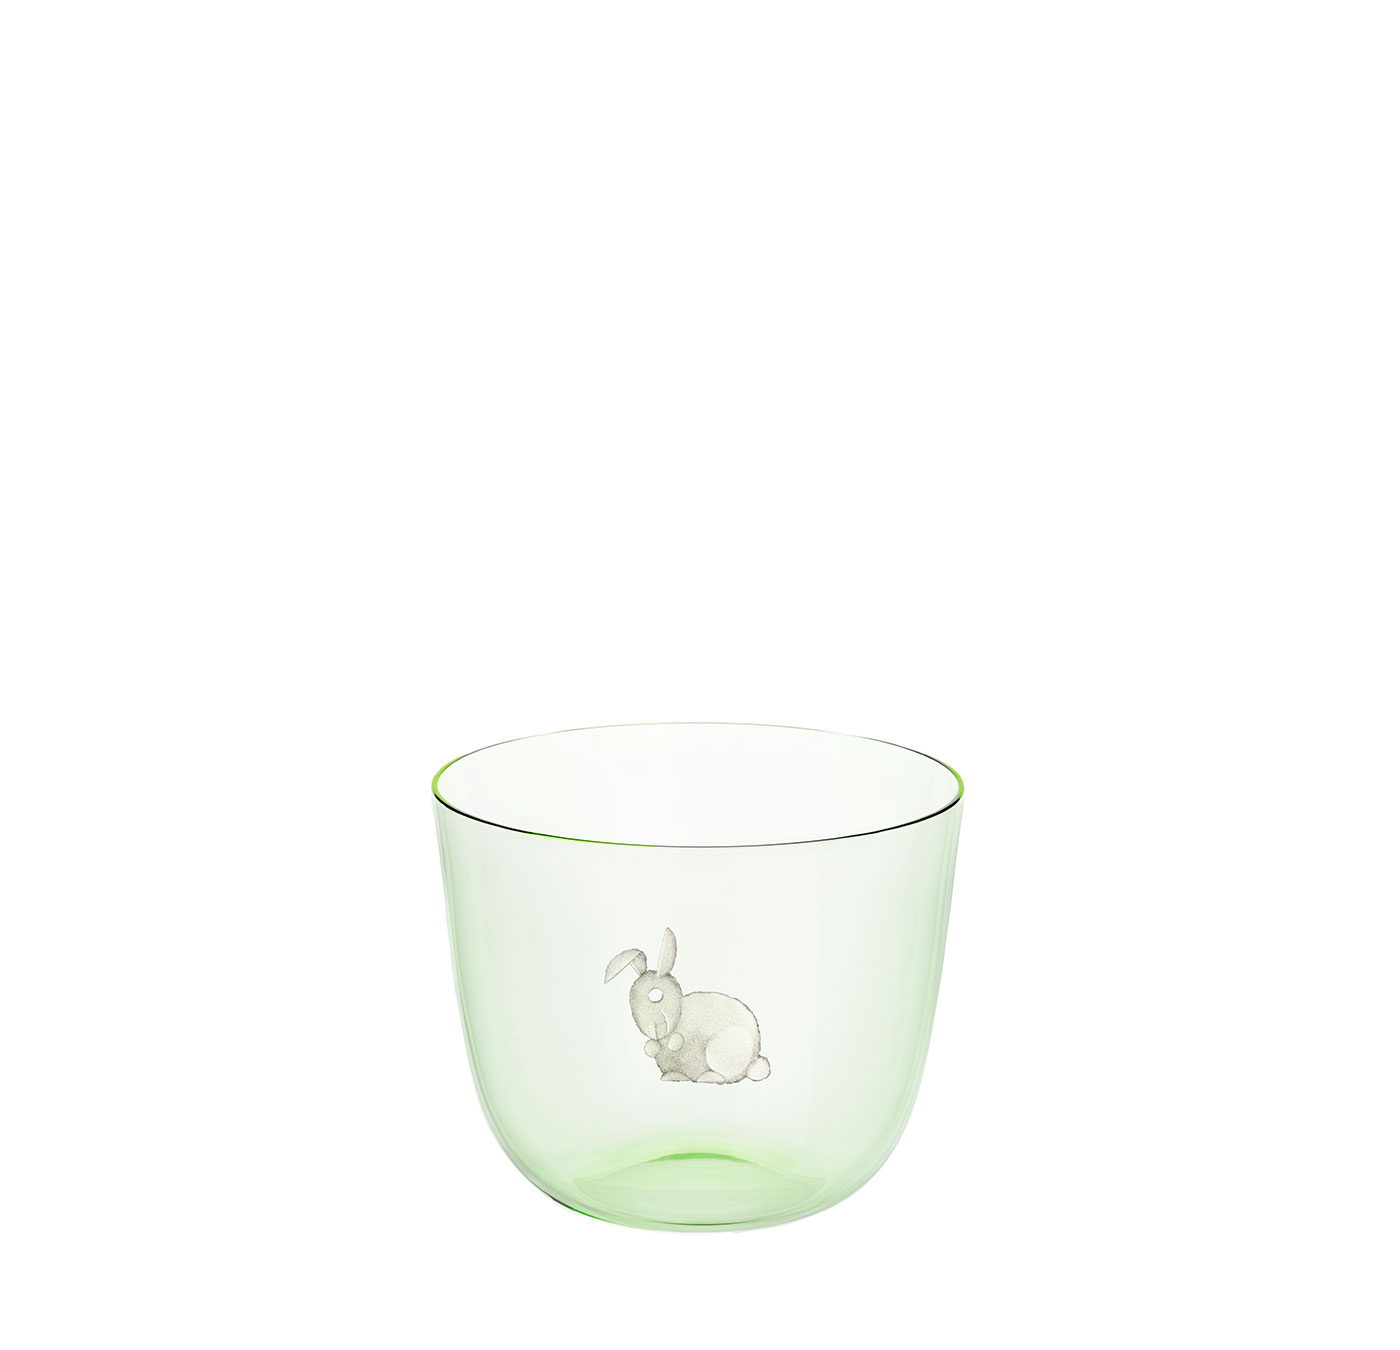 TS267GR Water tumbler “Rabbit” 19 light green